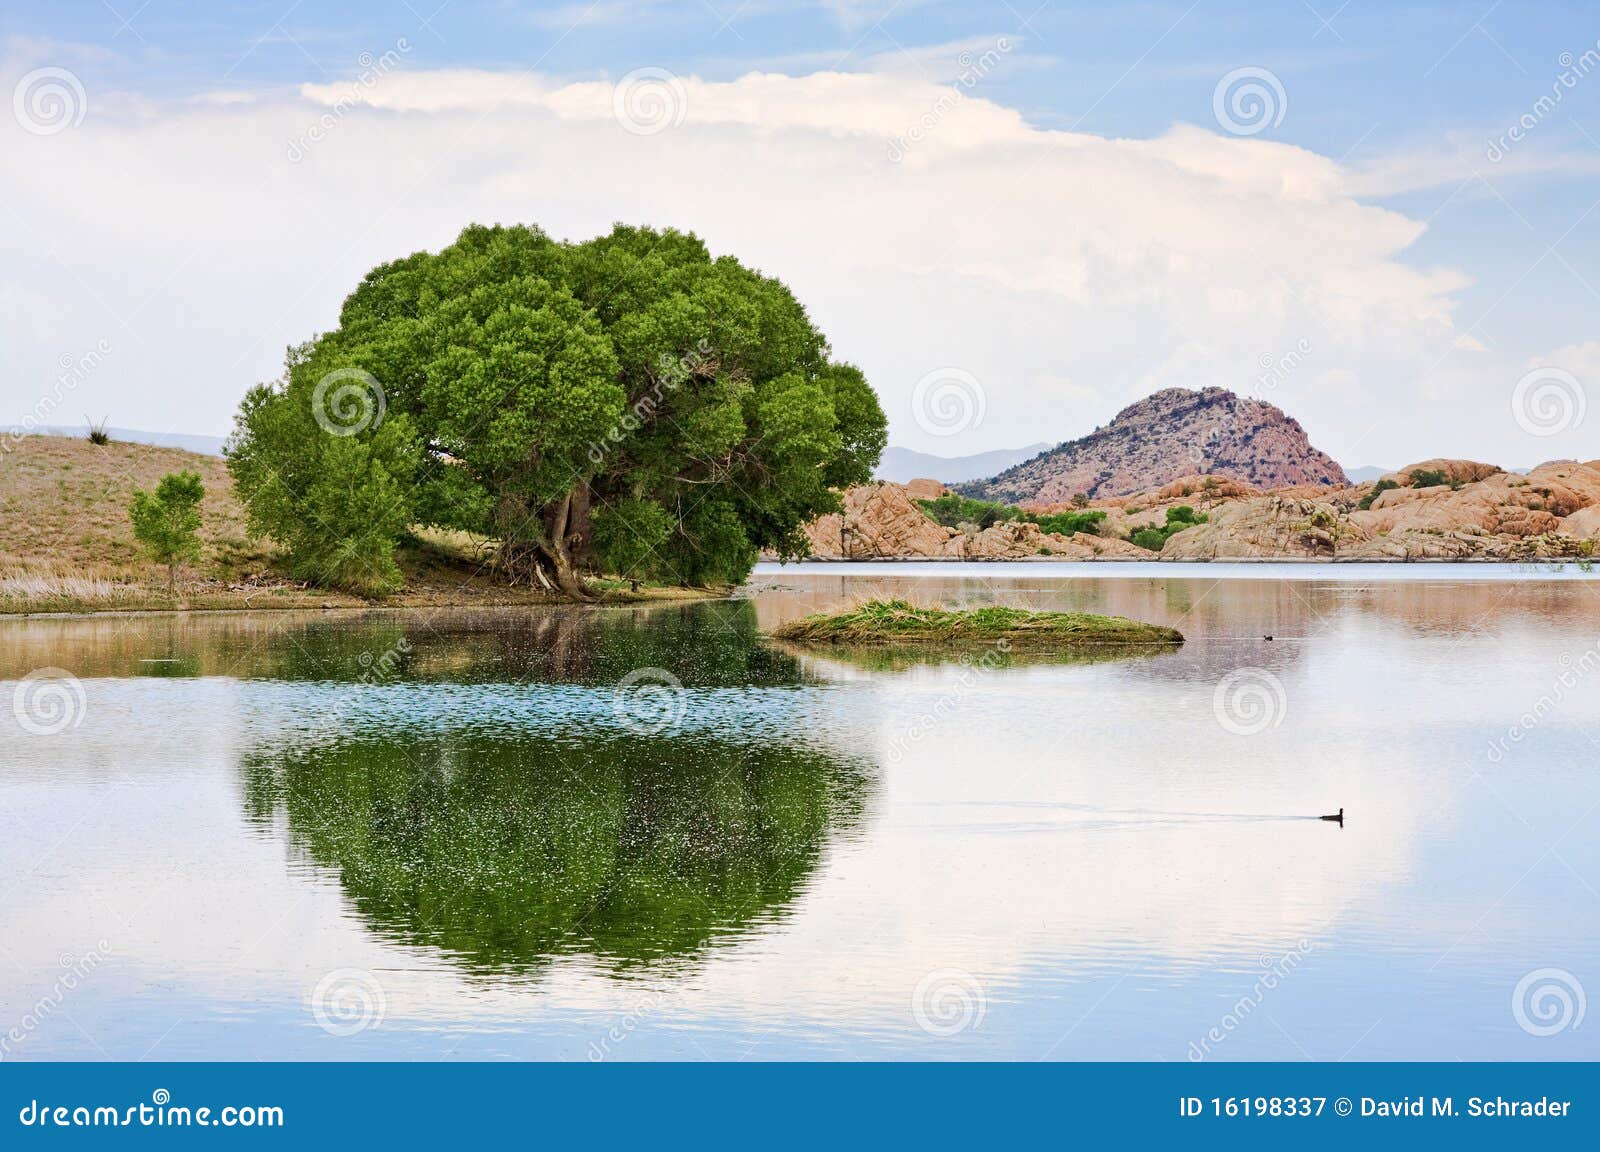 cottonwood tree and lake